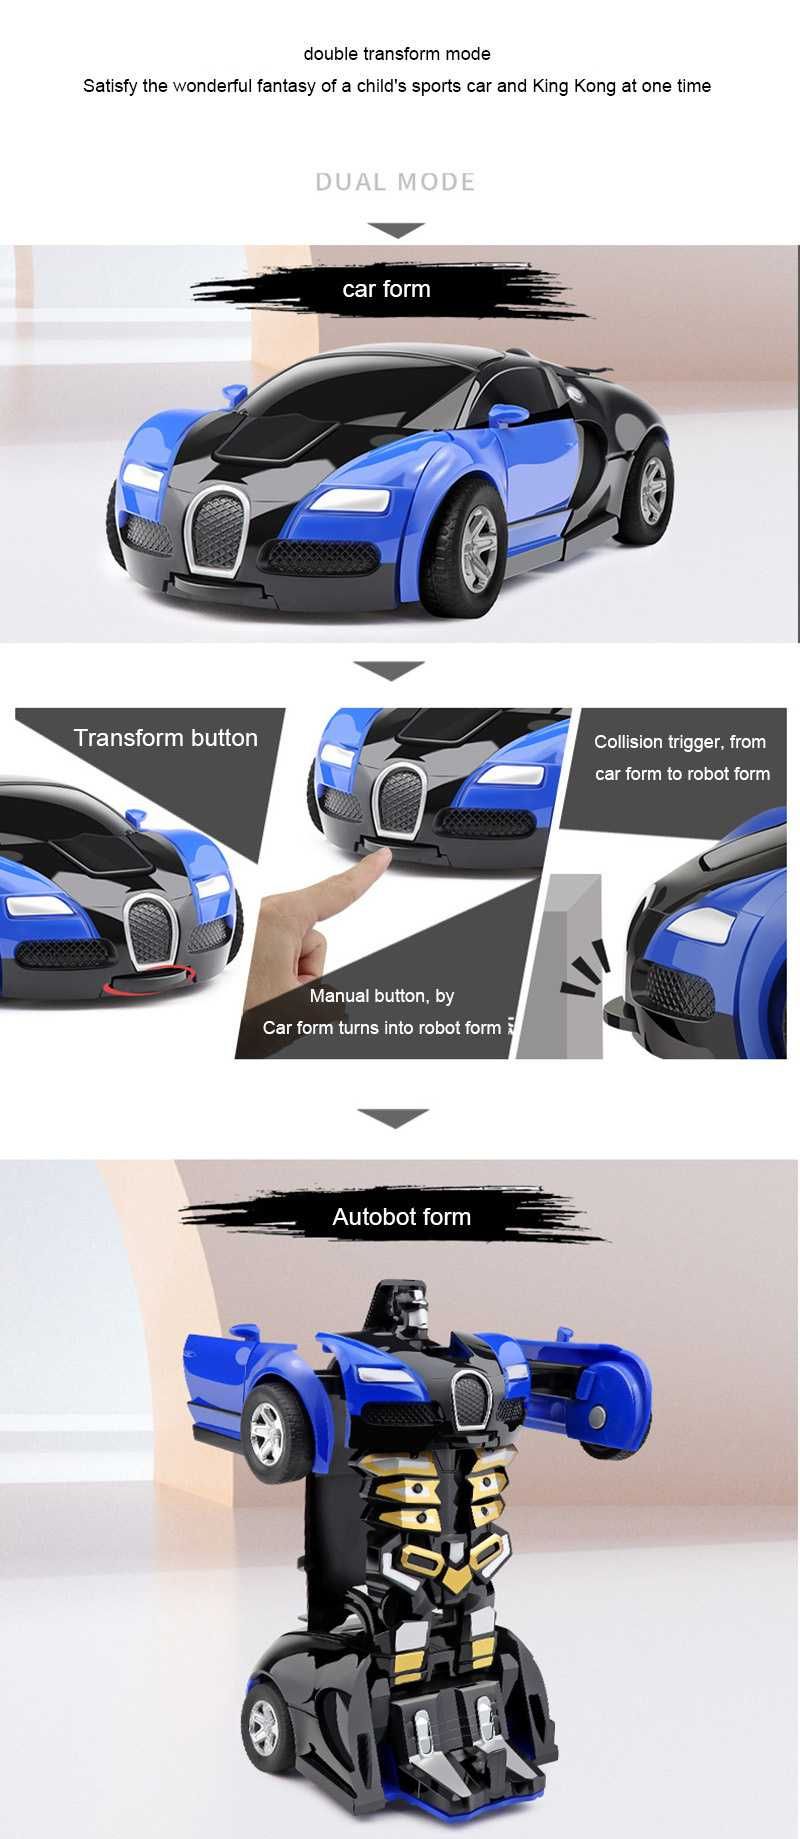 Masinuta robot Bugatti